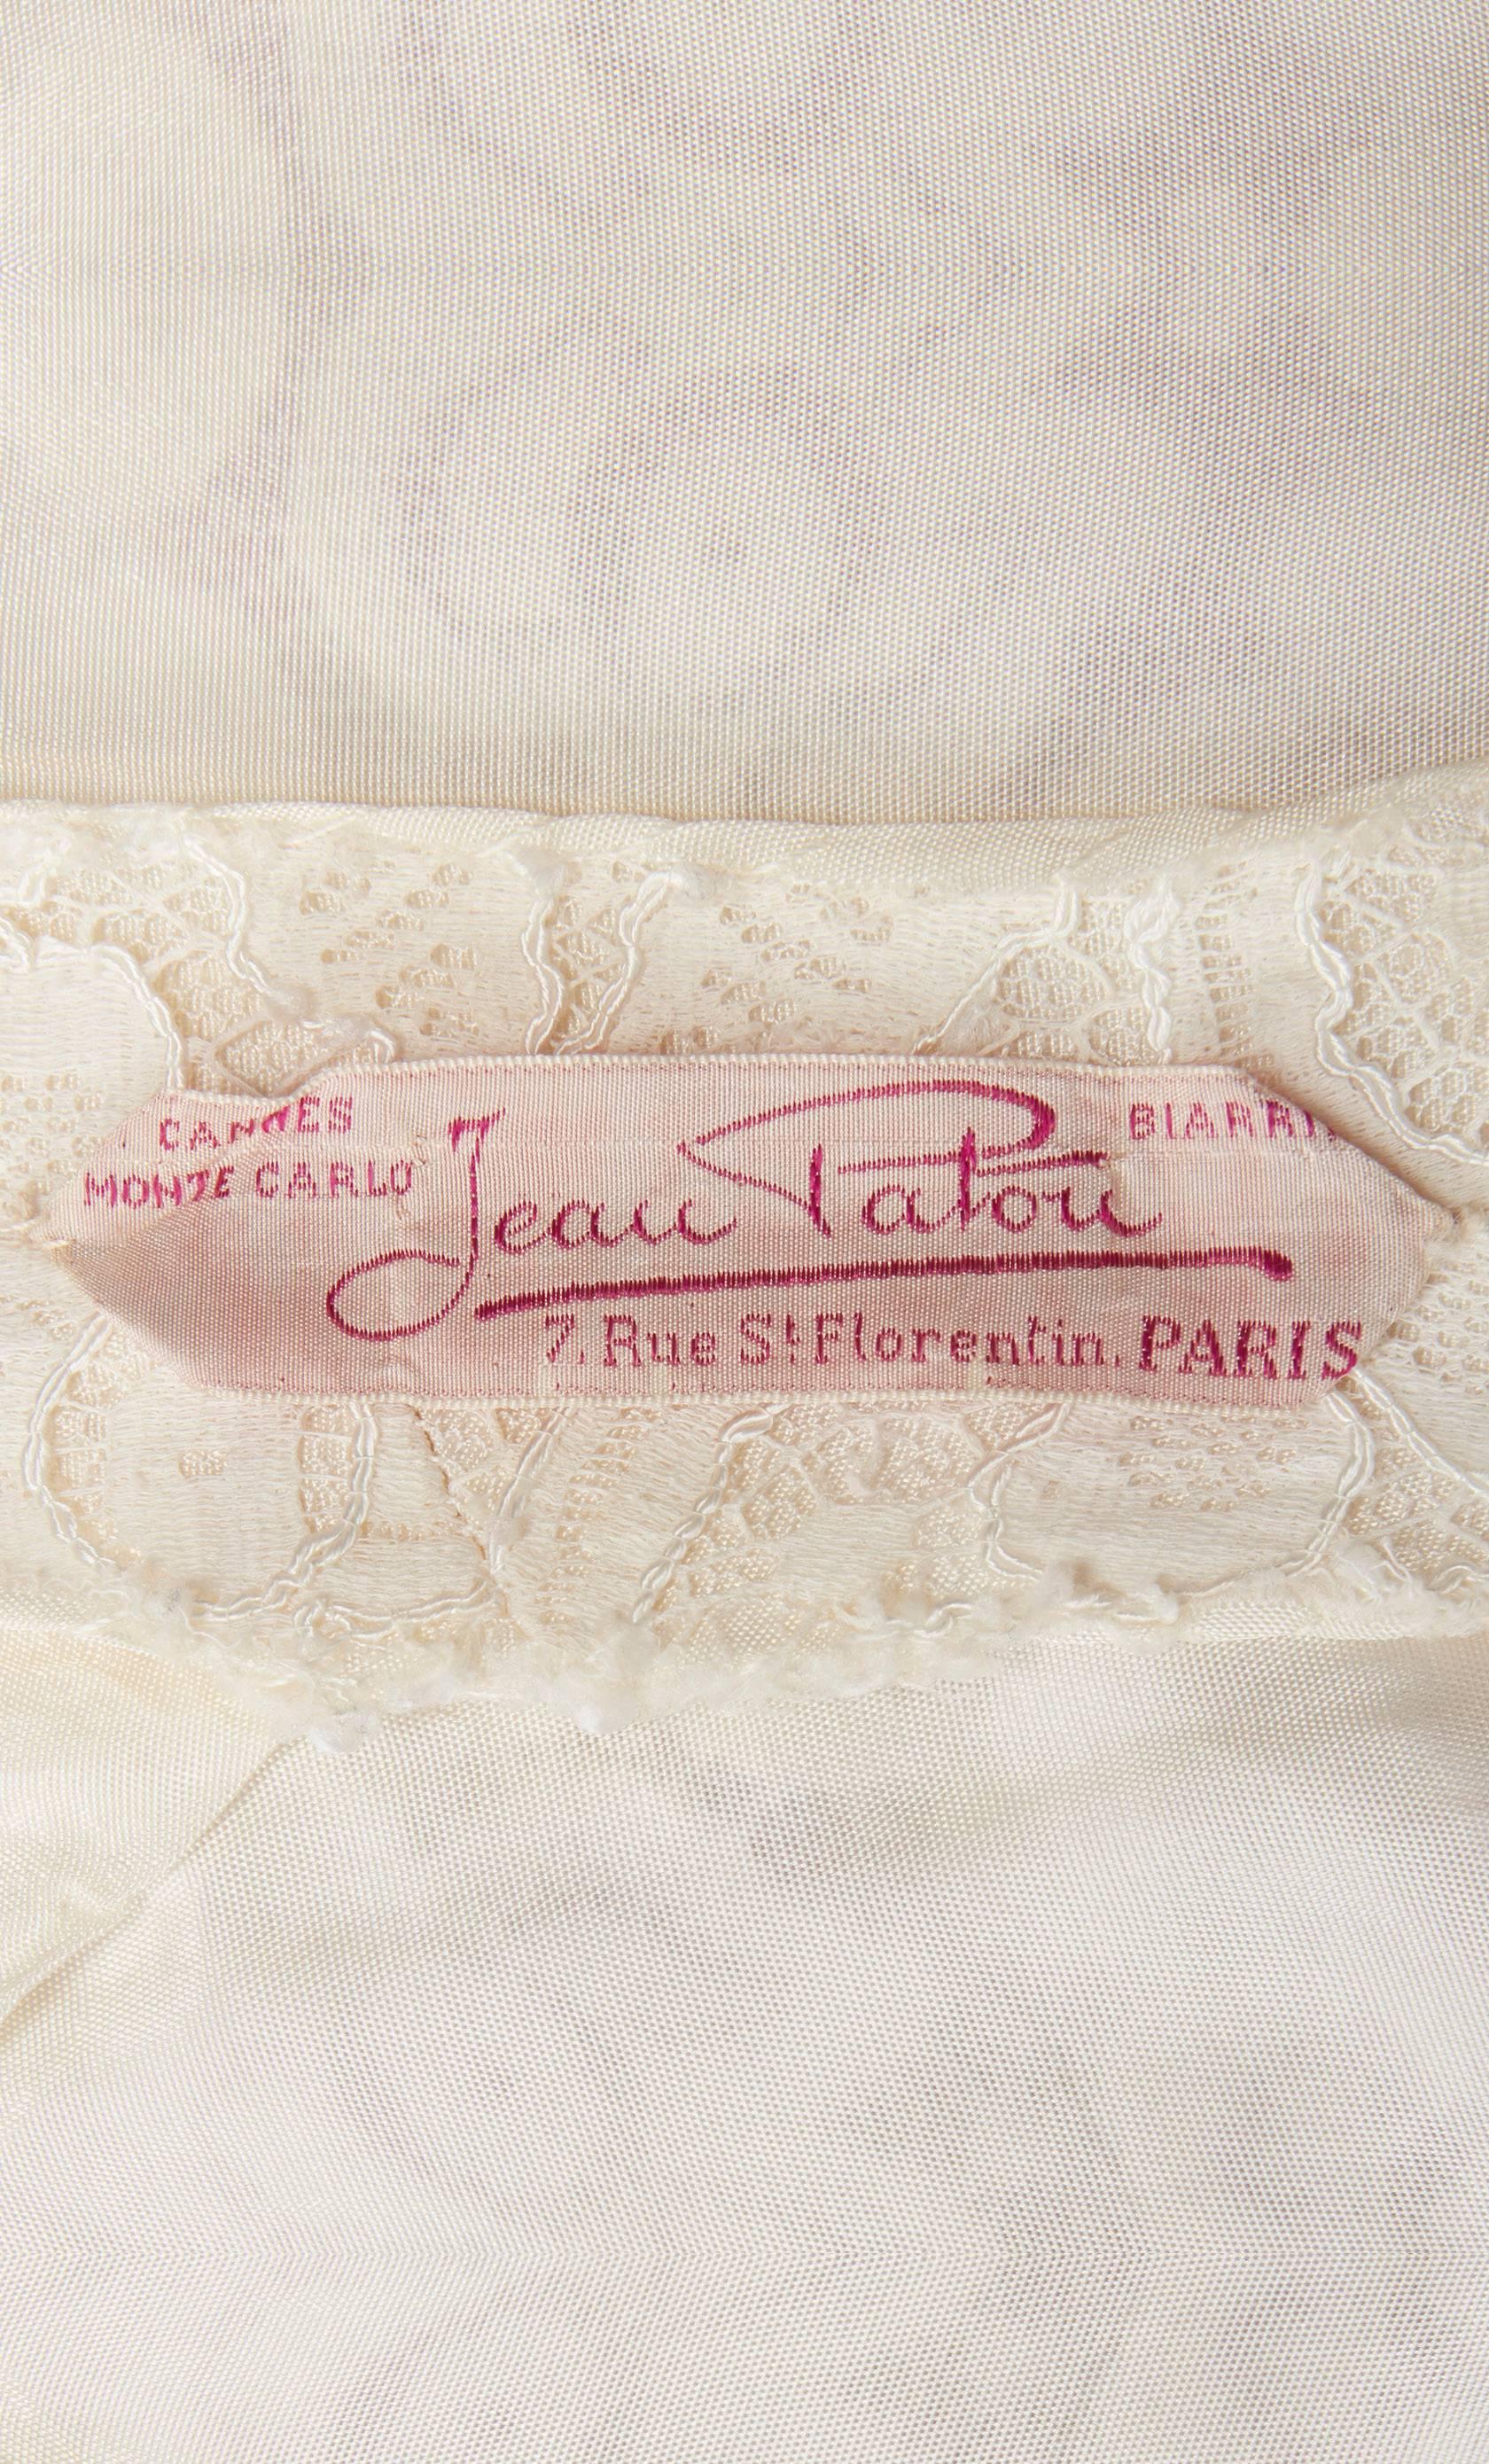 Women's Jean Patou Haute couture ivory dress, circa 1950